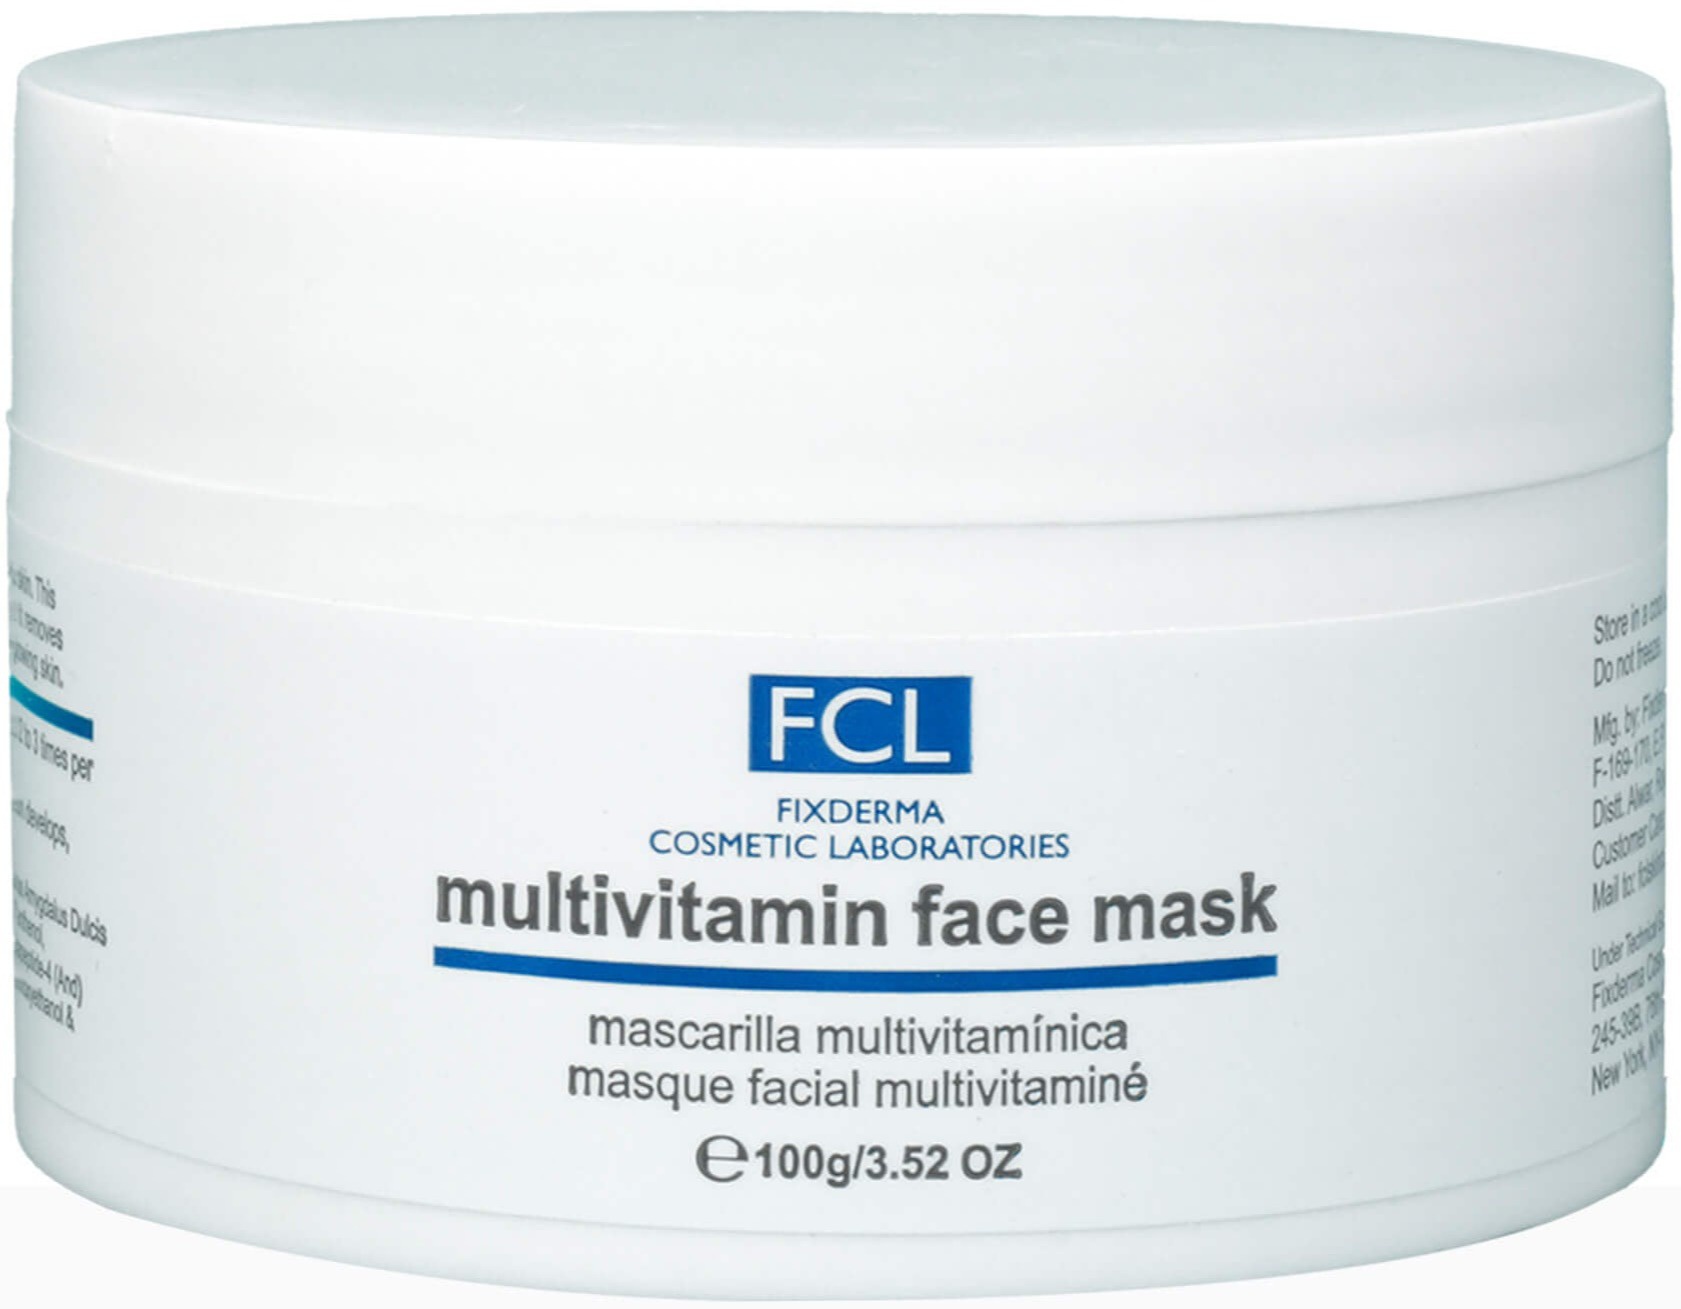 FCL Fixderma Multivitamin Face Mask